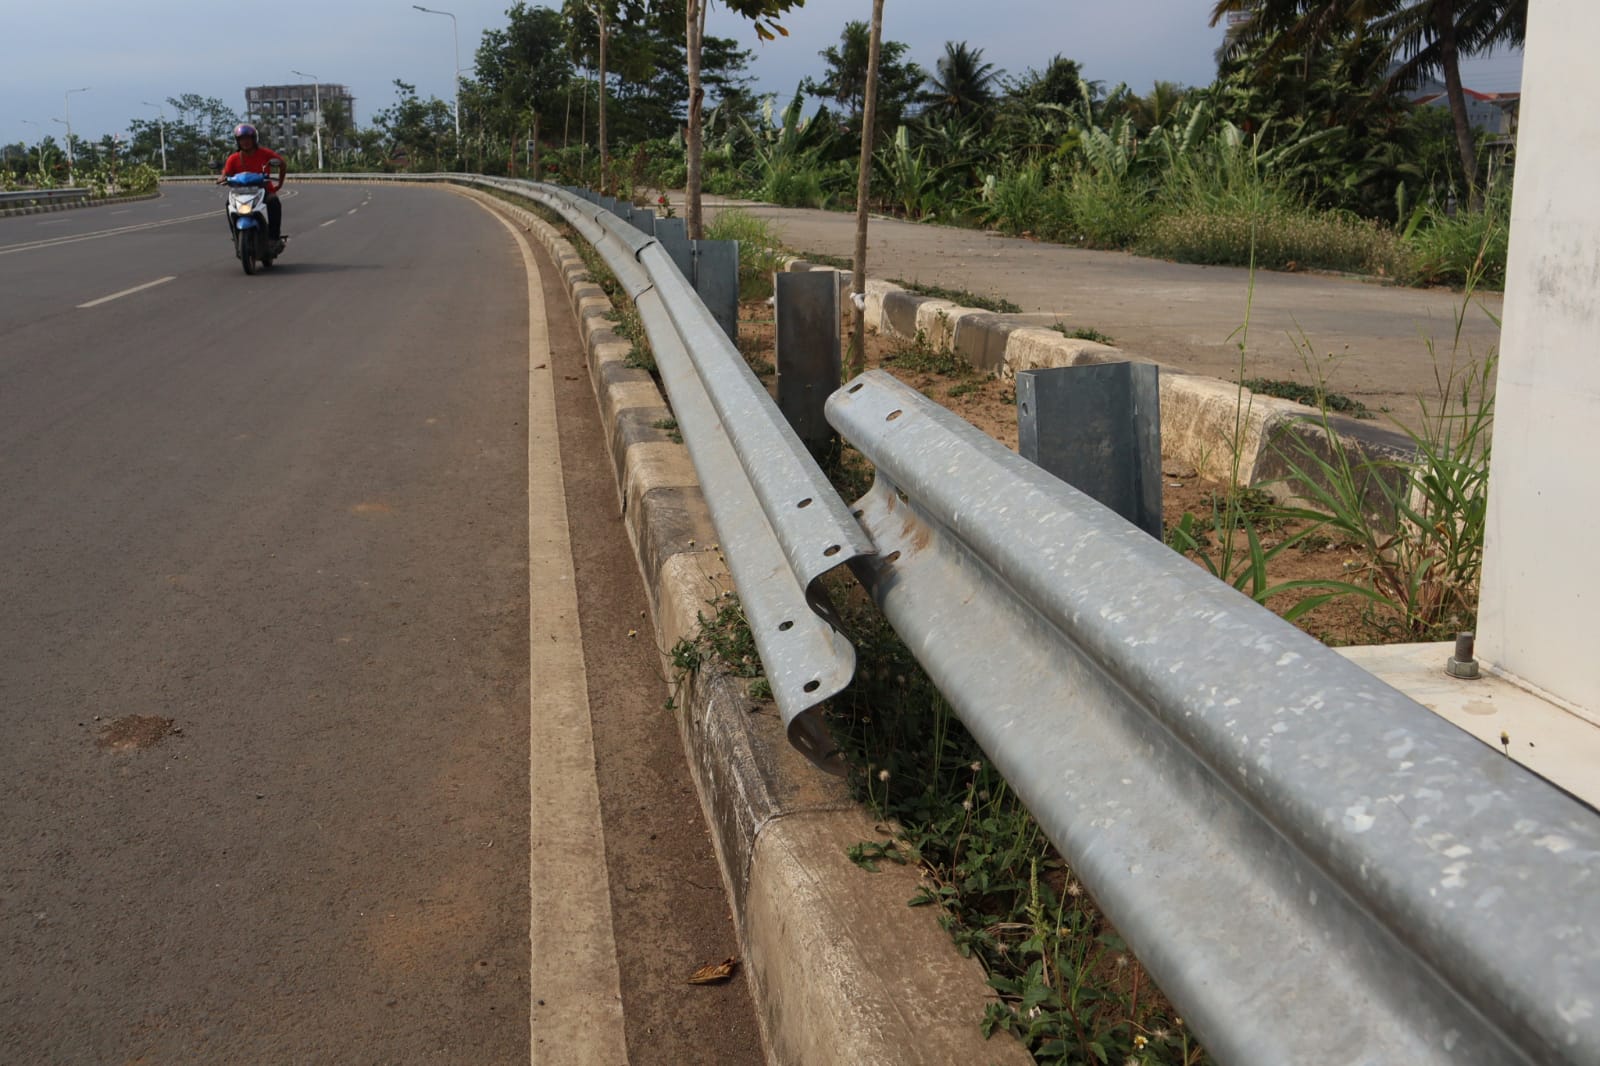 Baud Pagar Pembatas Jalan Bung Karno Raib, DPU : Pelaku Bakal Disanksi Tegas